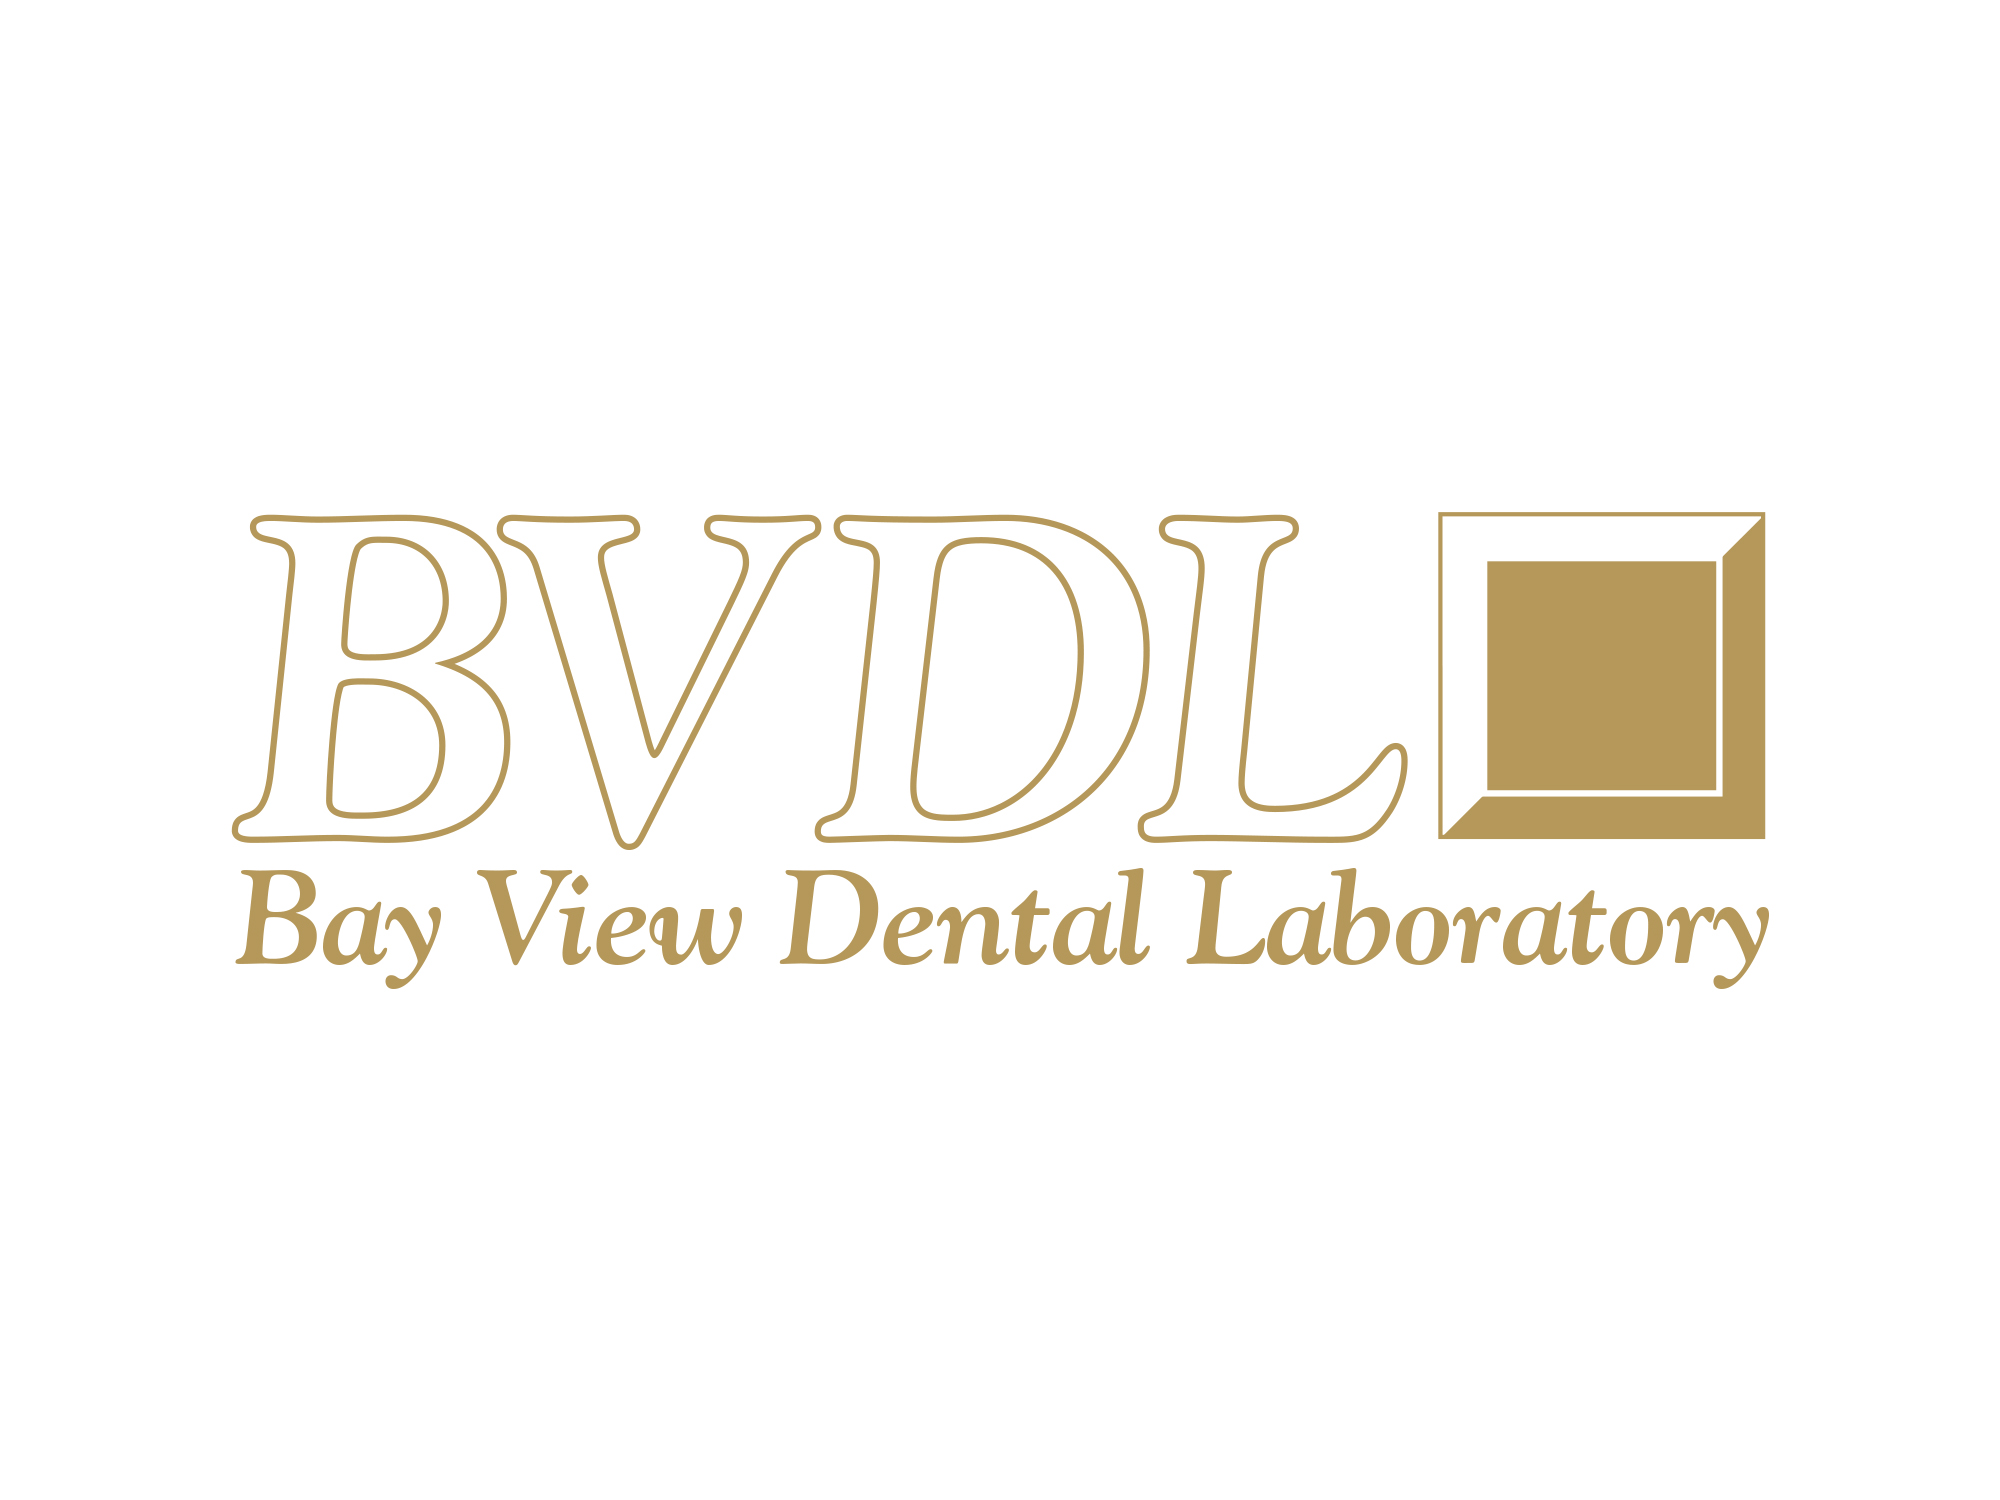 Bay View Dental Lab, 2011.